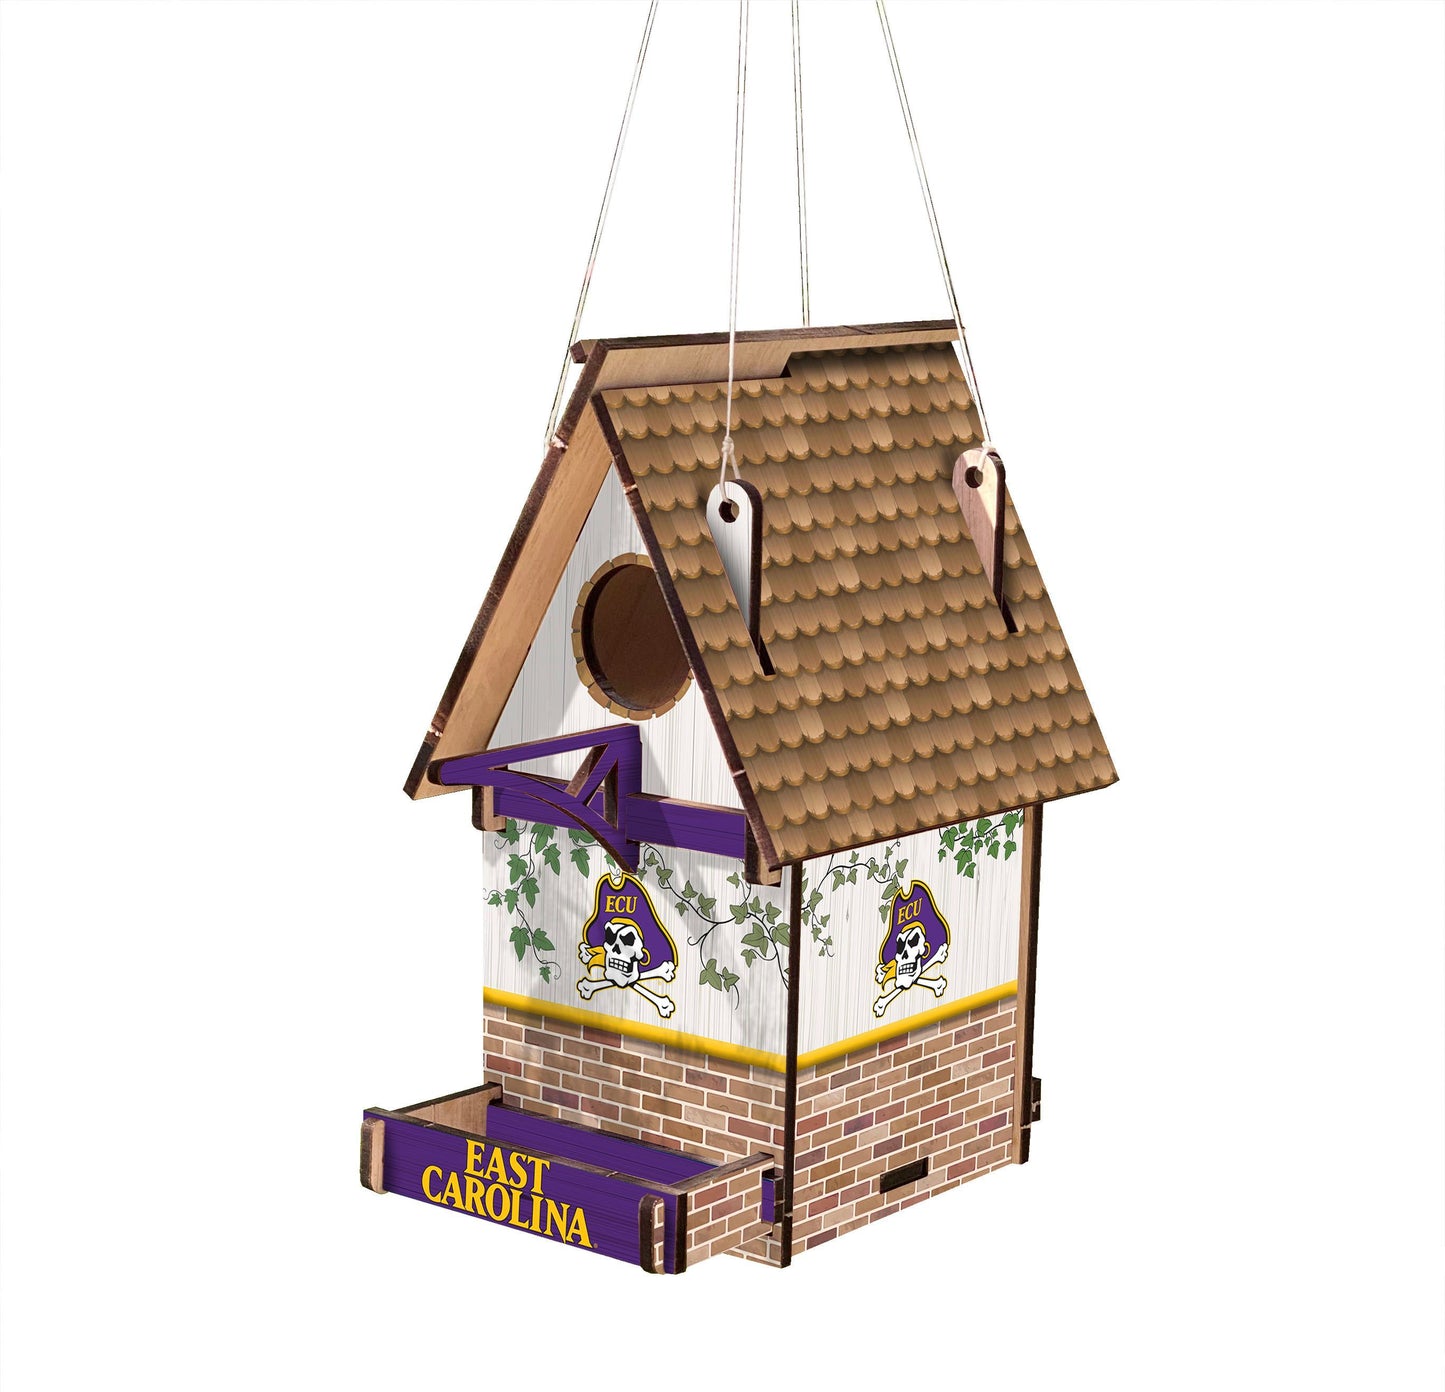 East Carolina Pirates Wood Birdhouse by Fan Creations